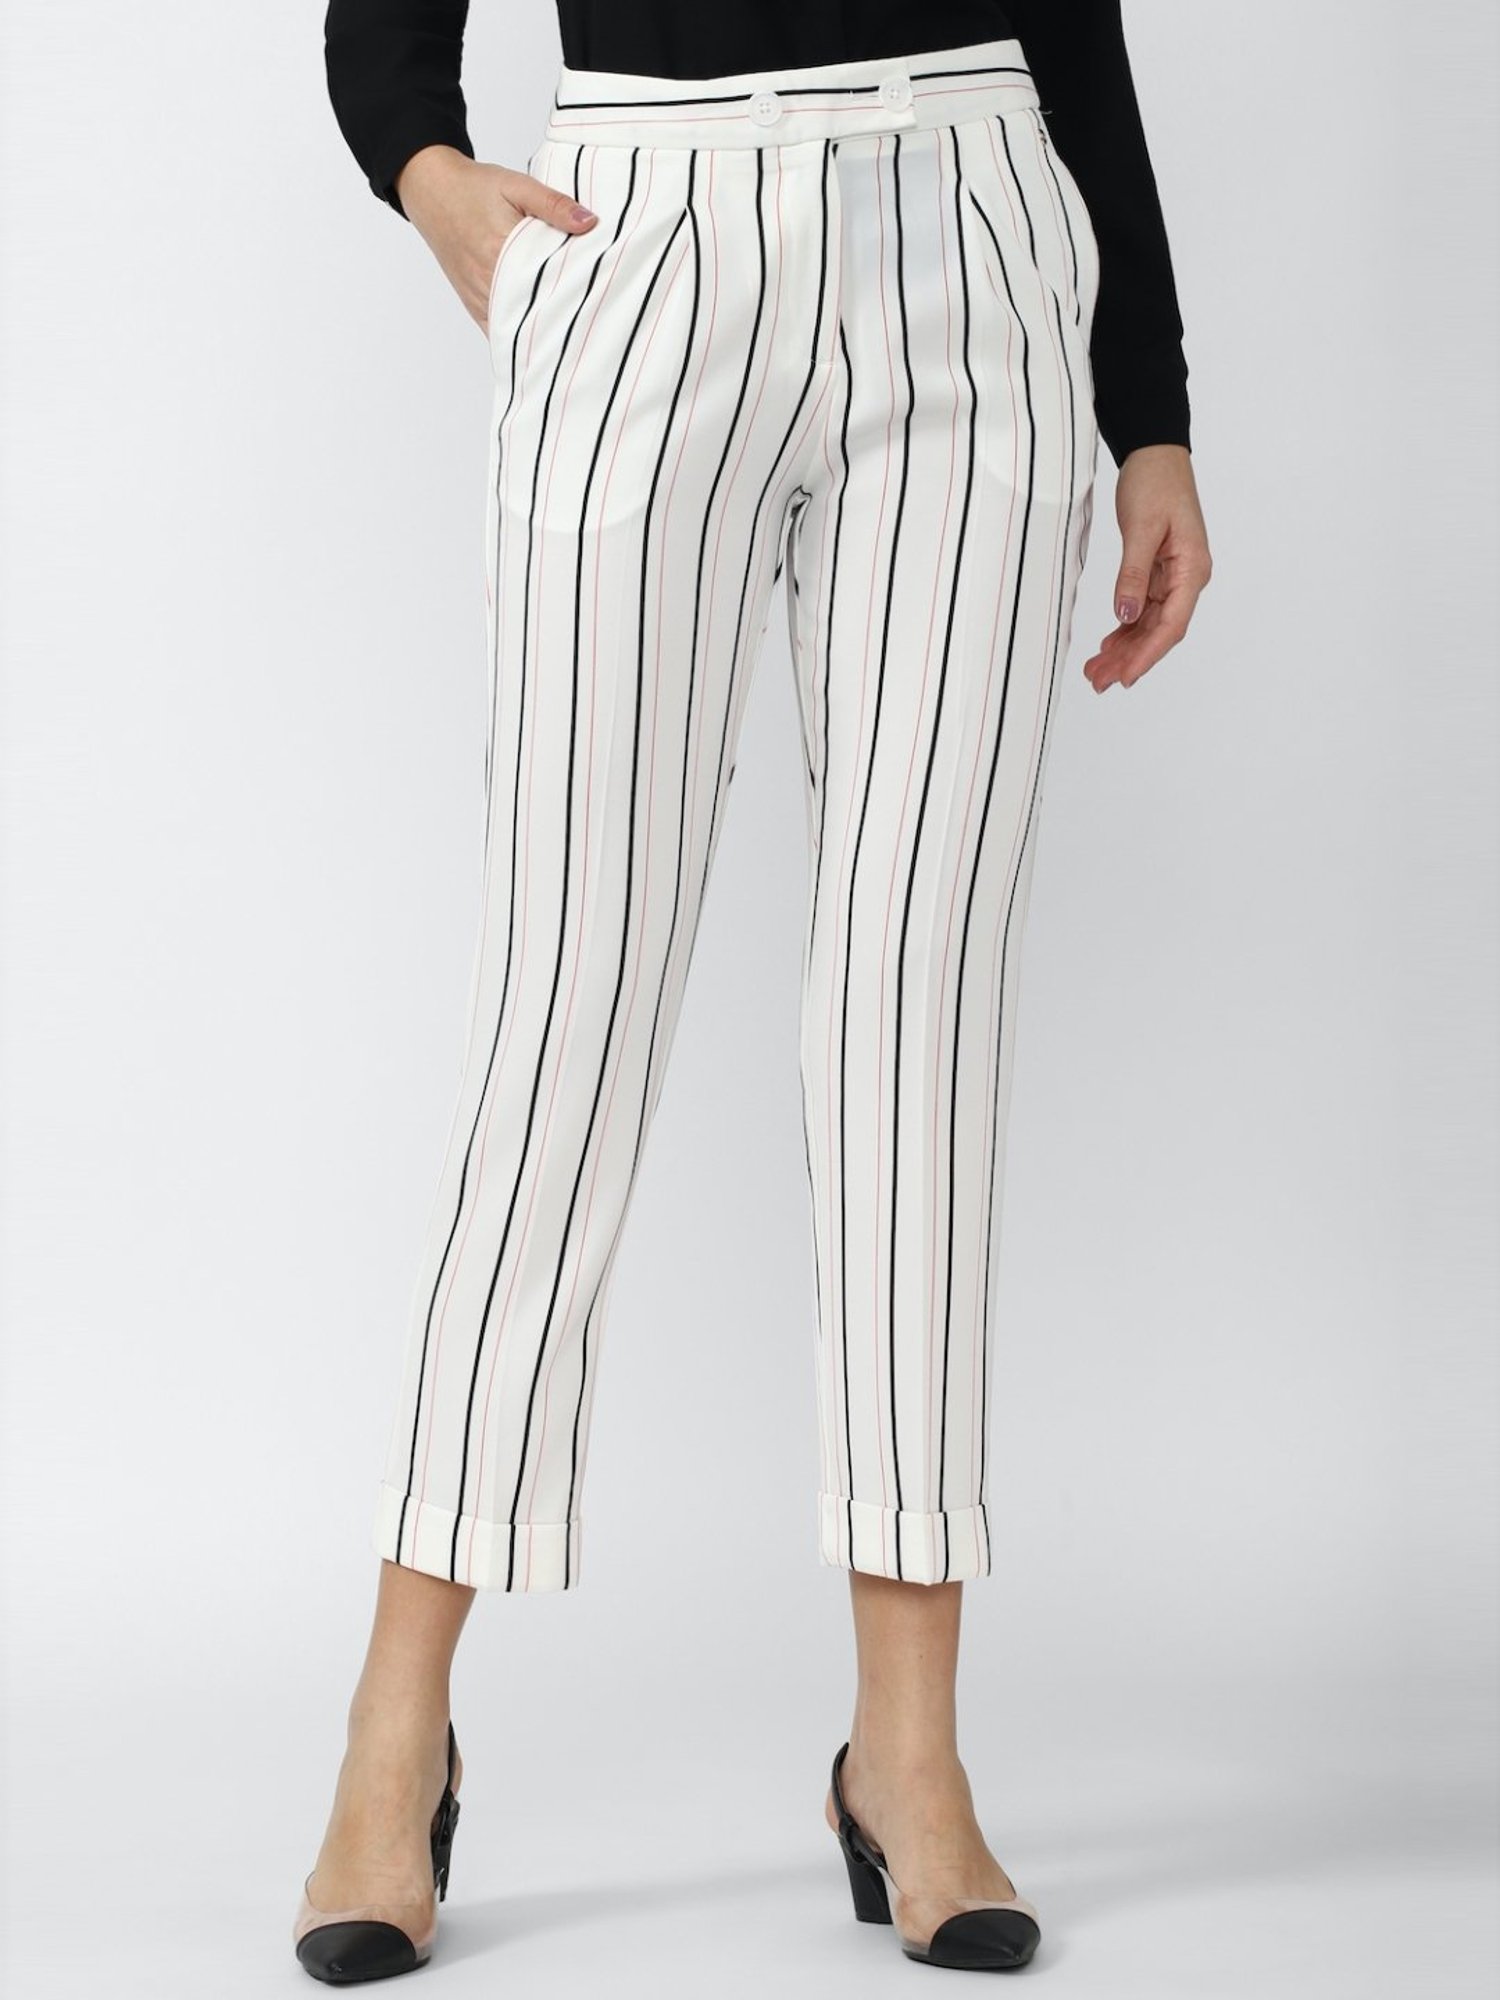 Van Heusen Trousers and Pants  Buy Van Heusen Women Beige Check Formal  Slim Fit Trousers Online  Nykaa Fashion